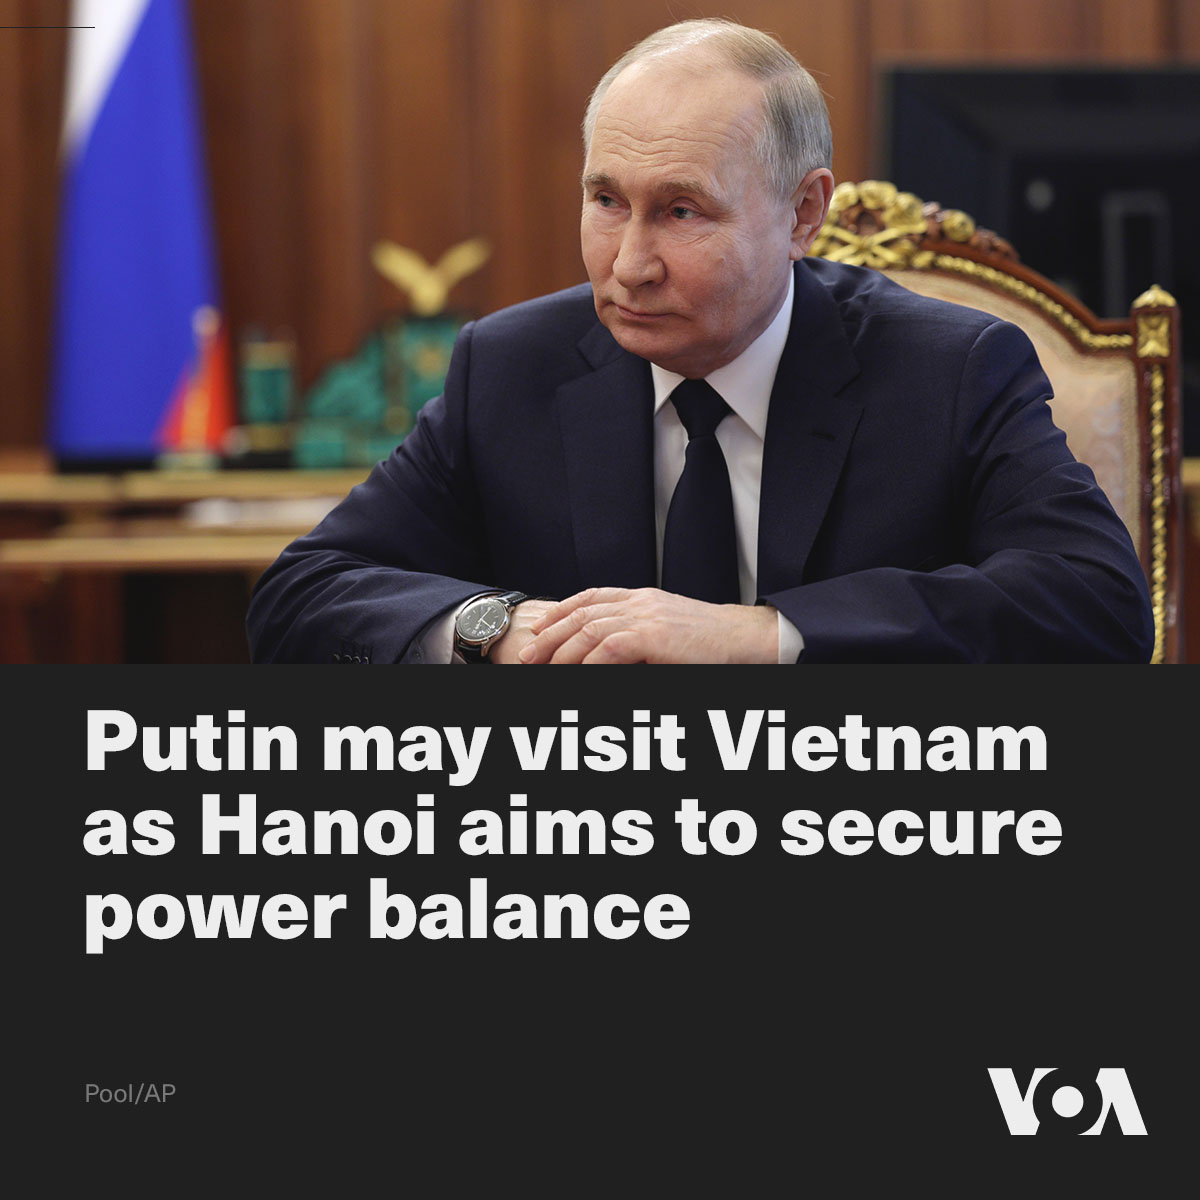 Putin may visit Vietnam as Hanoi aims to secure power balance voanews.com/a/putin-may-vi…